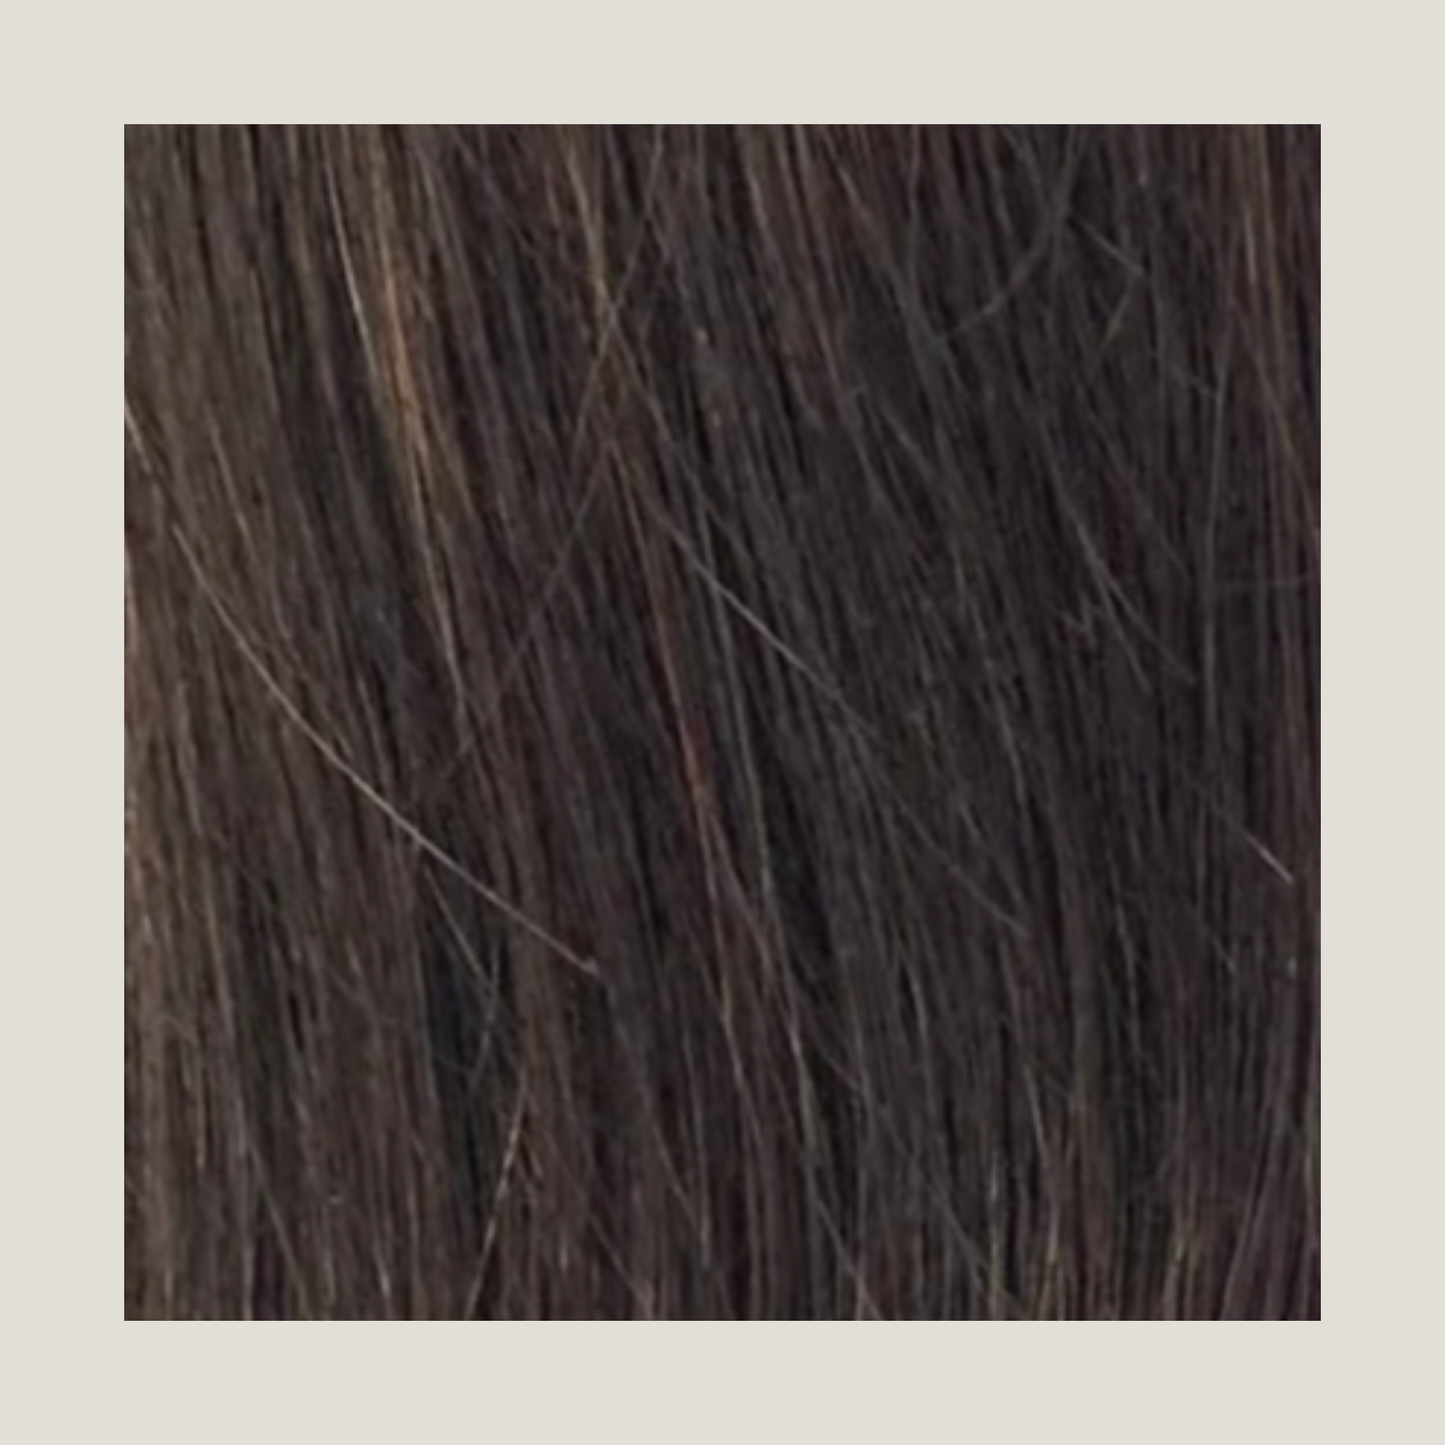 European Virgin Remy Human Hair, Clip In, 16 Inches, Straight, Colour 4, Quick Shipping!